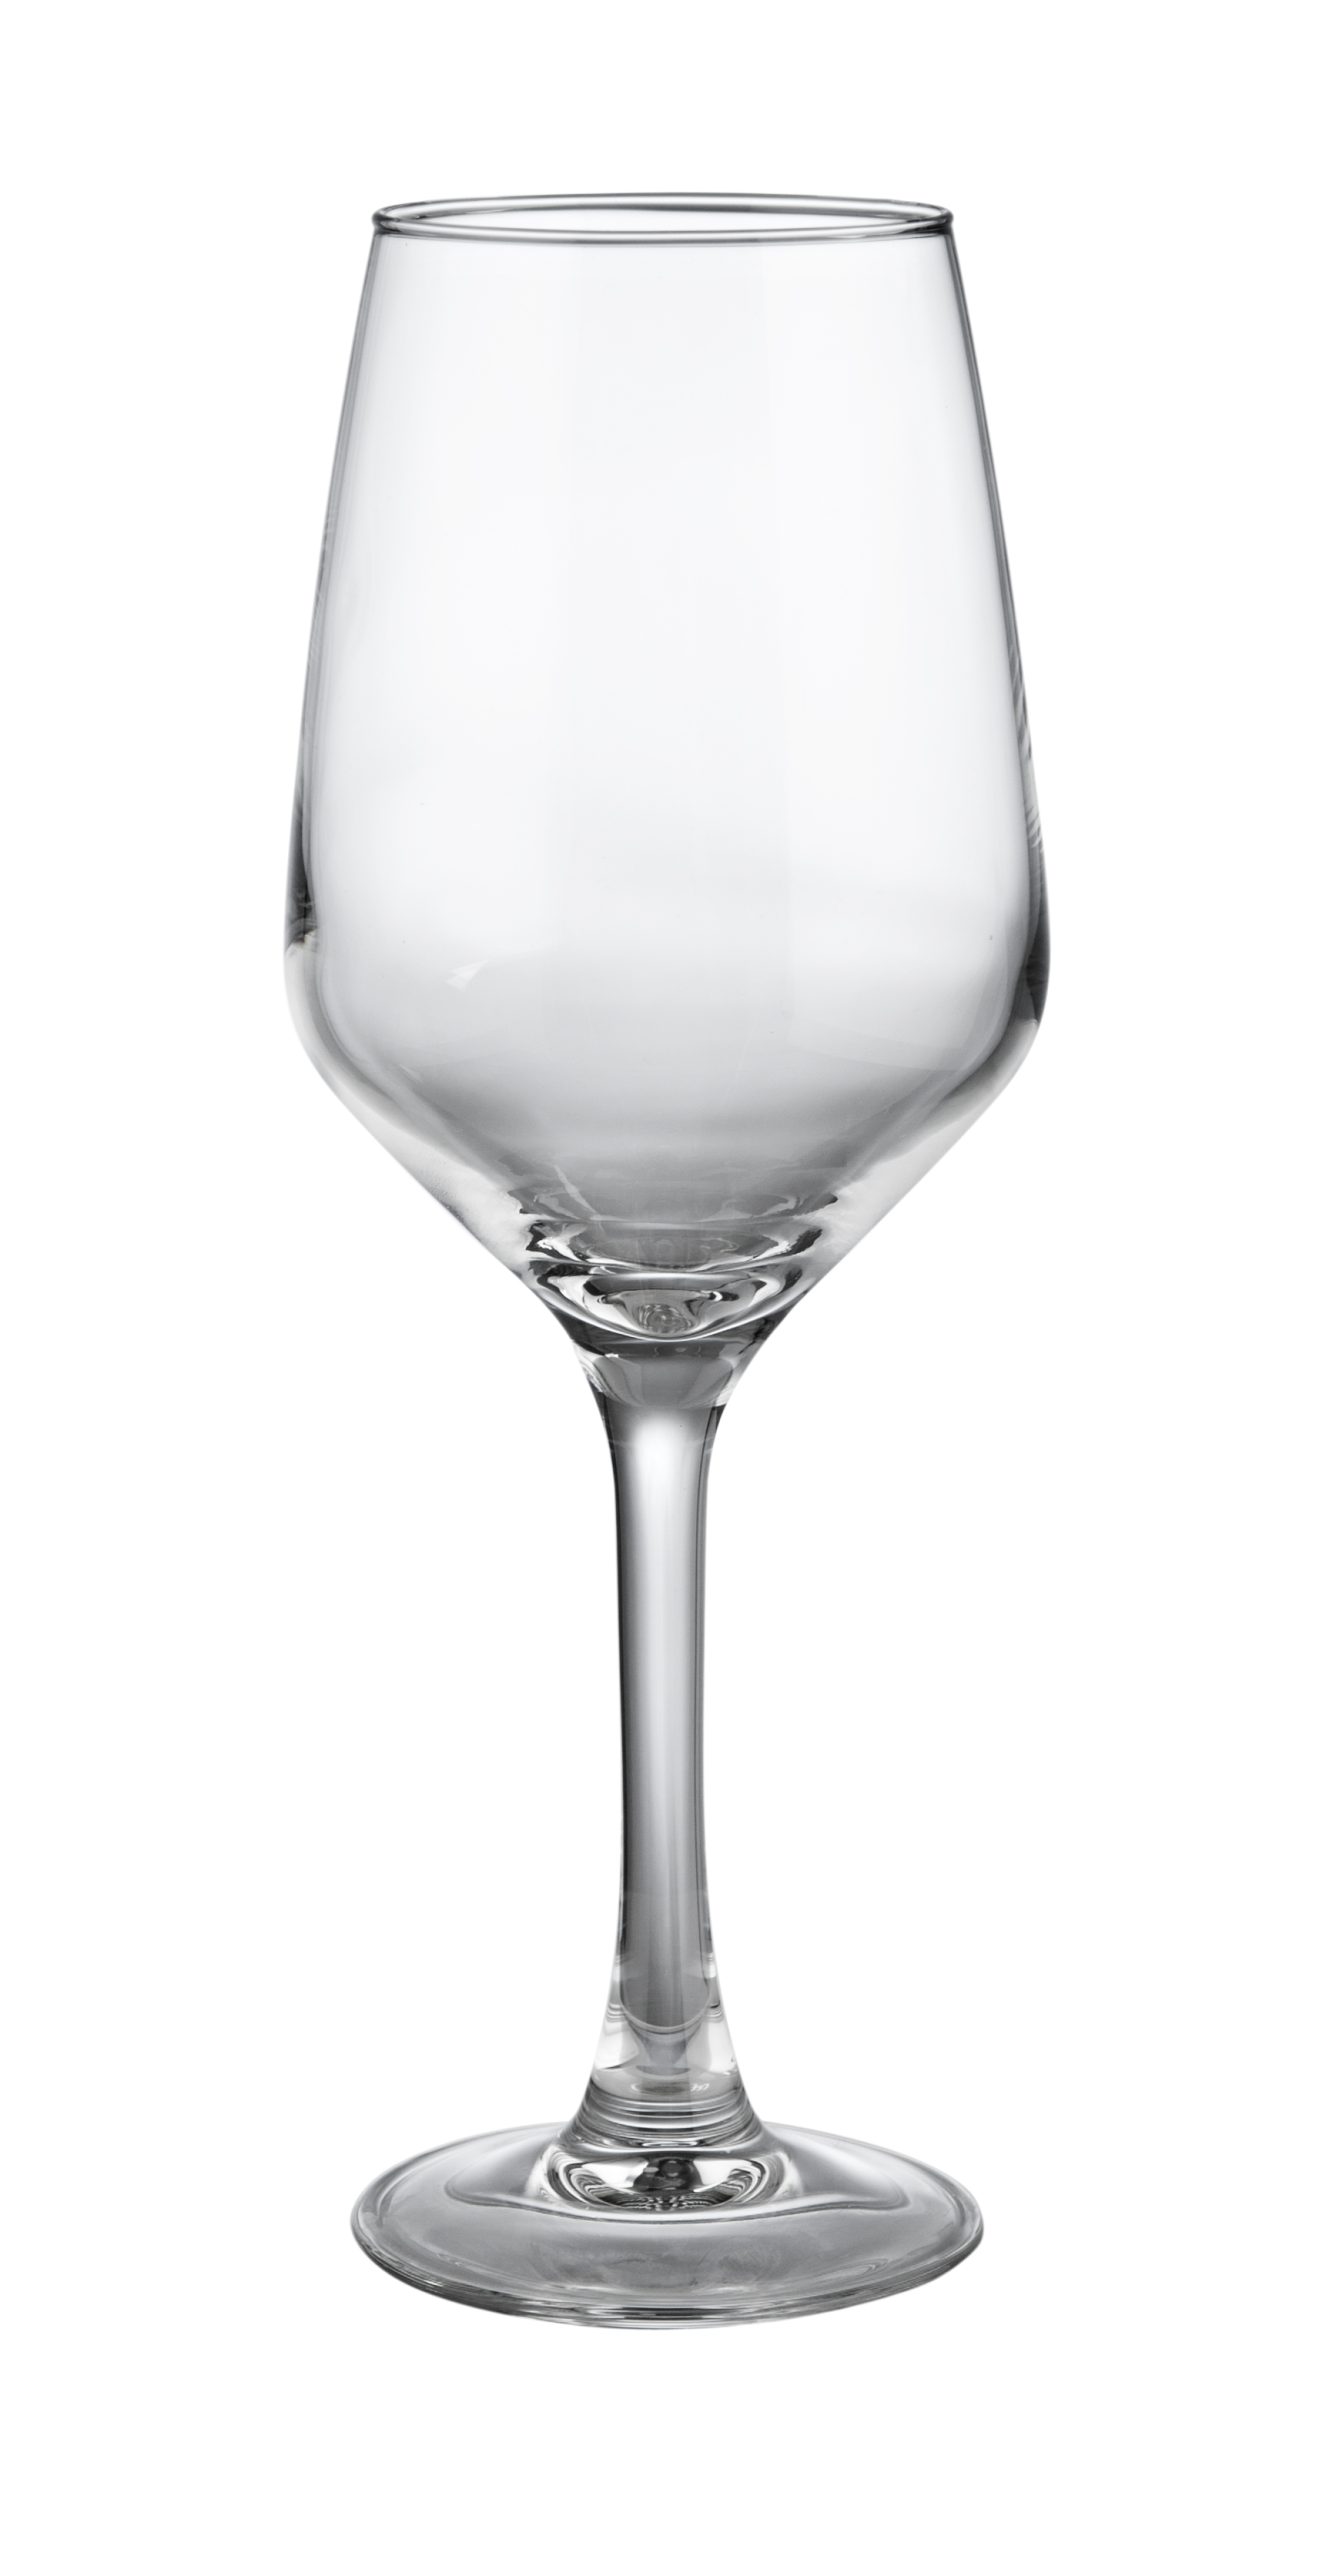 MENCIA 58 WINE GLASS Tempered HOSTELVIA VICRILA SPAIN ®